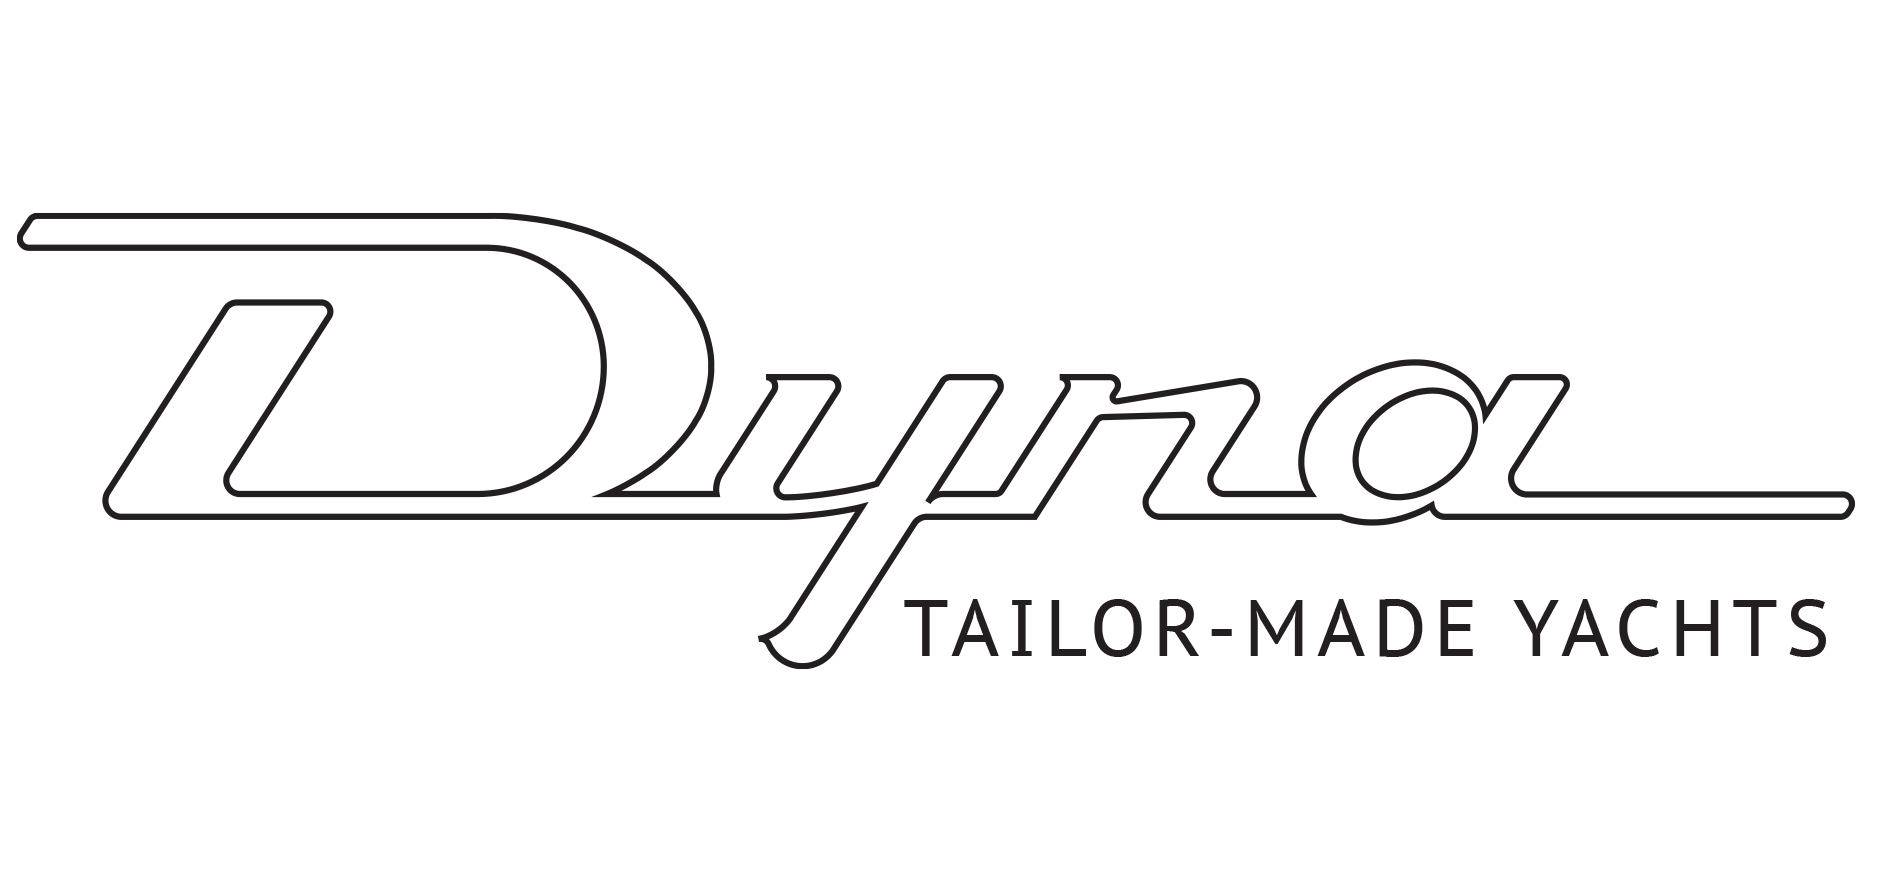 Dyna logo